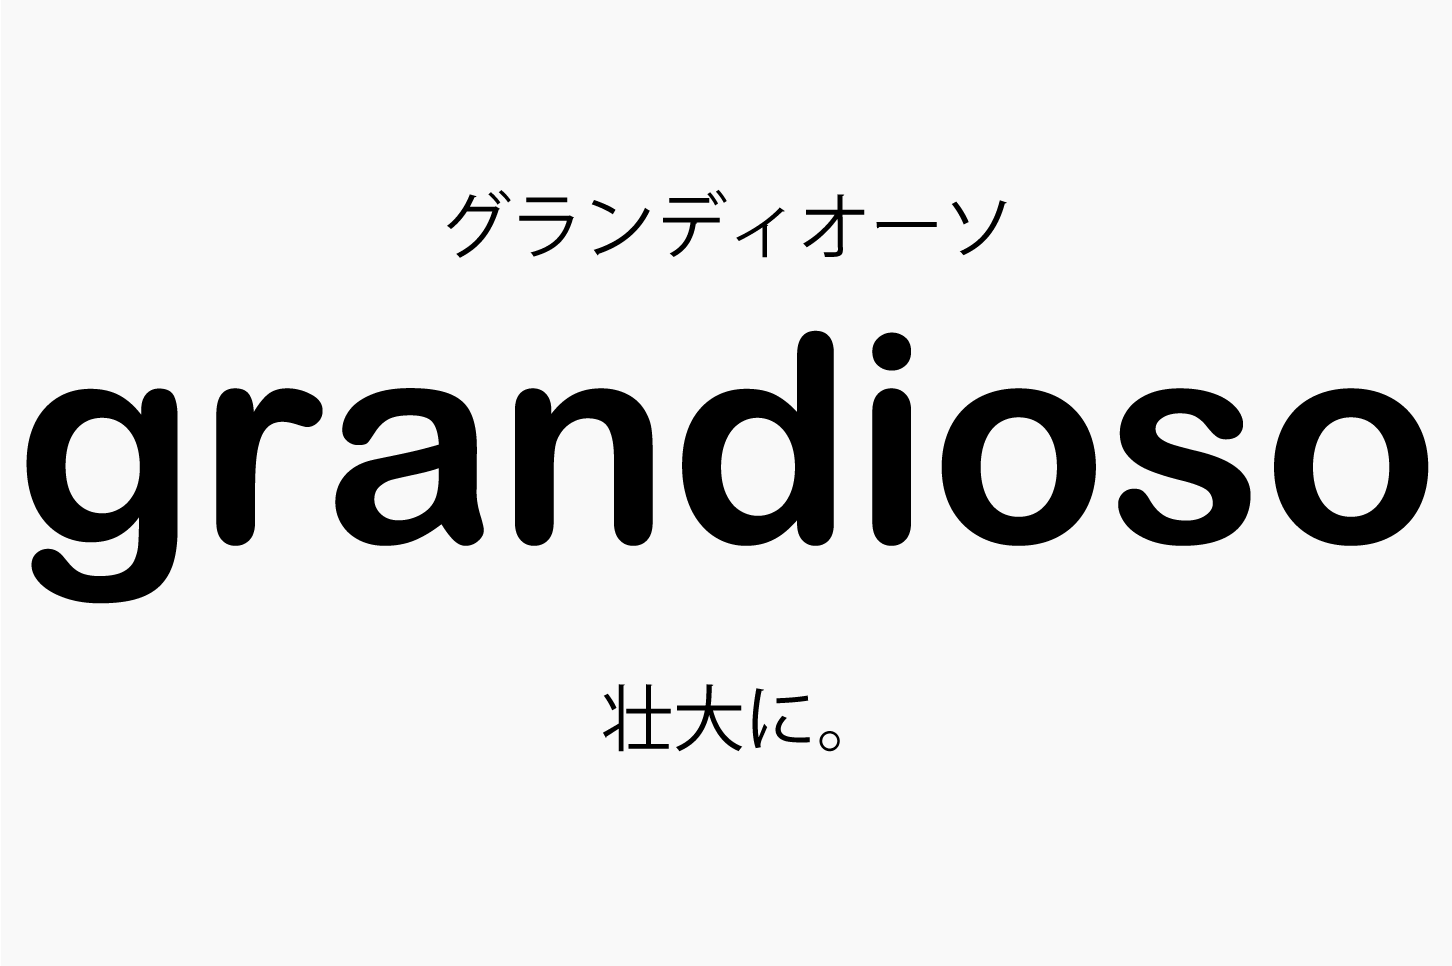 Grandioso グランディオーソ の意味 音楽用語辞典